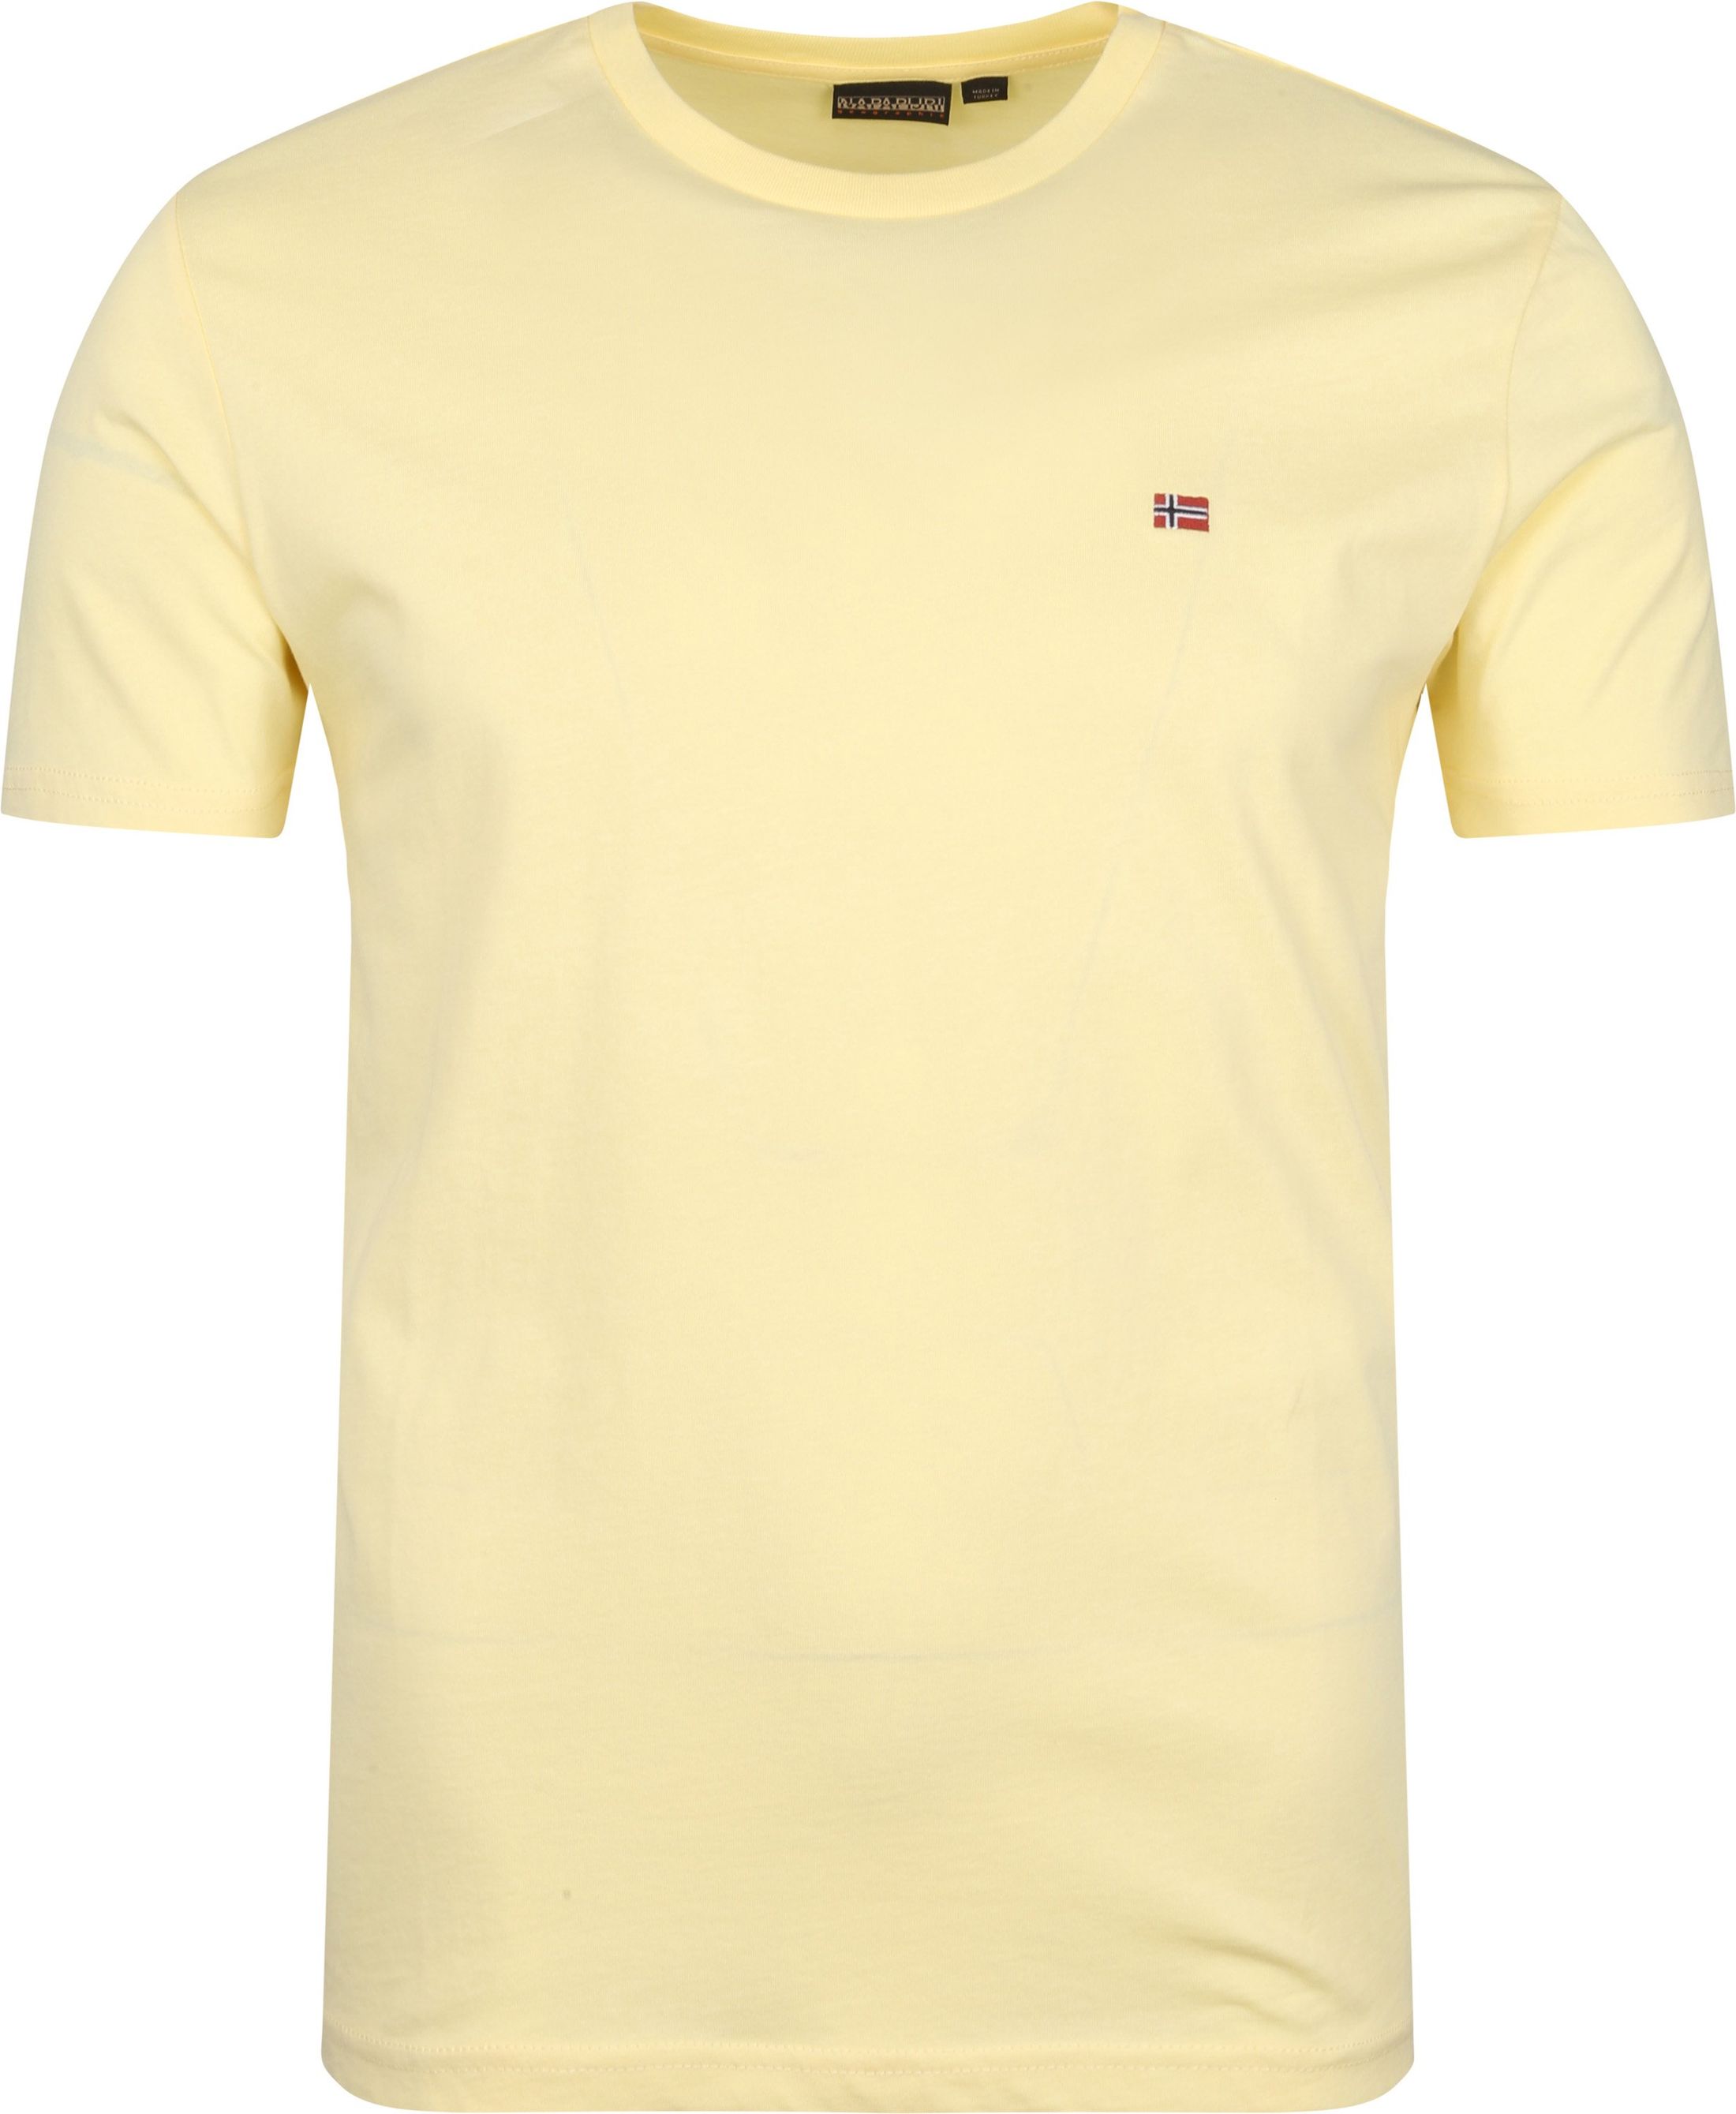 Napapijri Salis T-Shirt Yellow size L